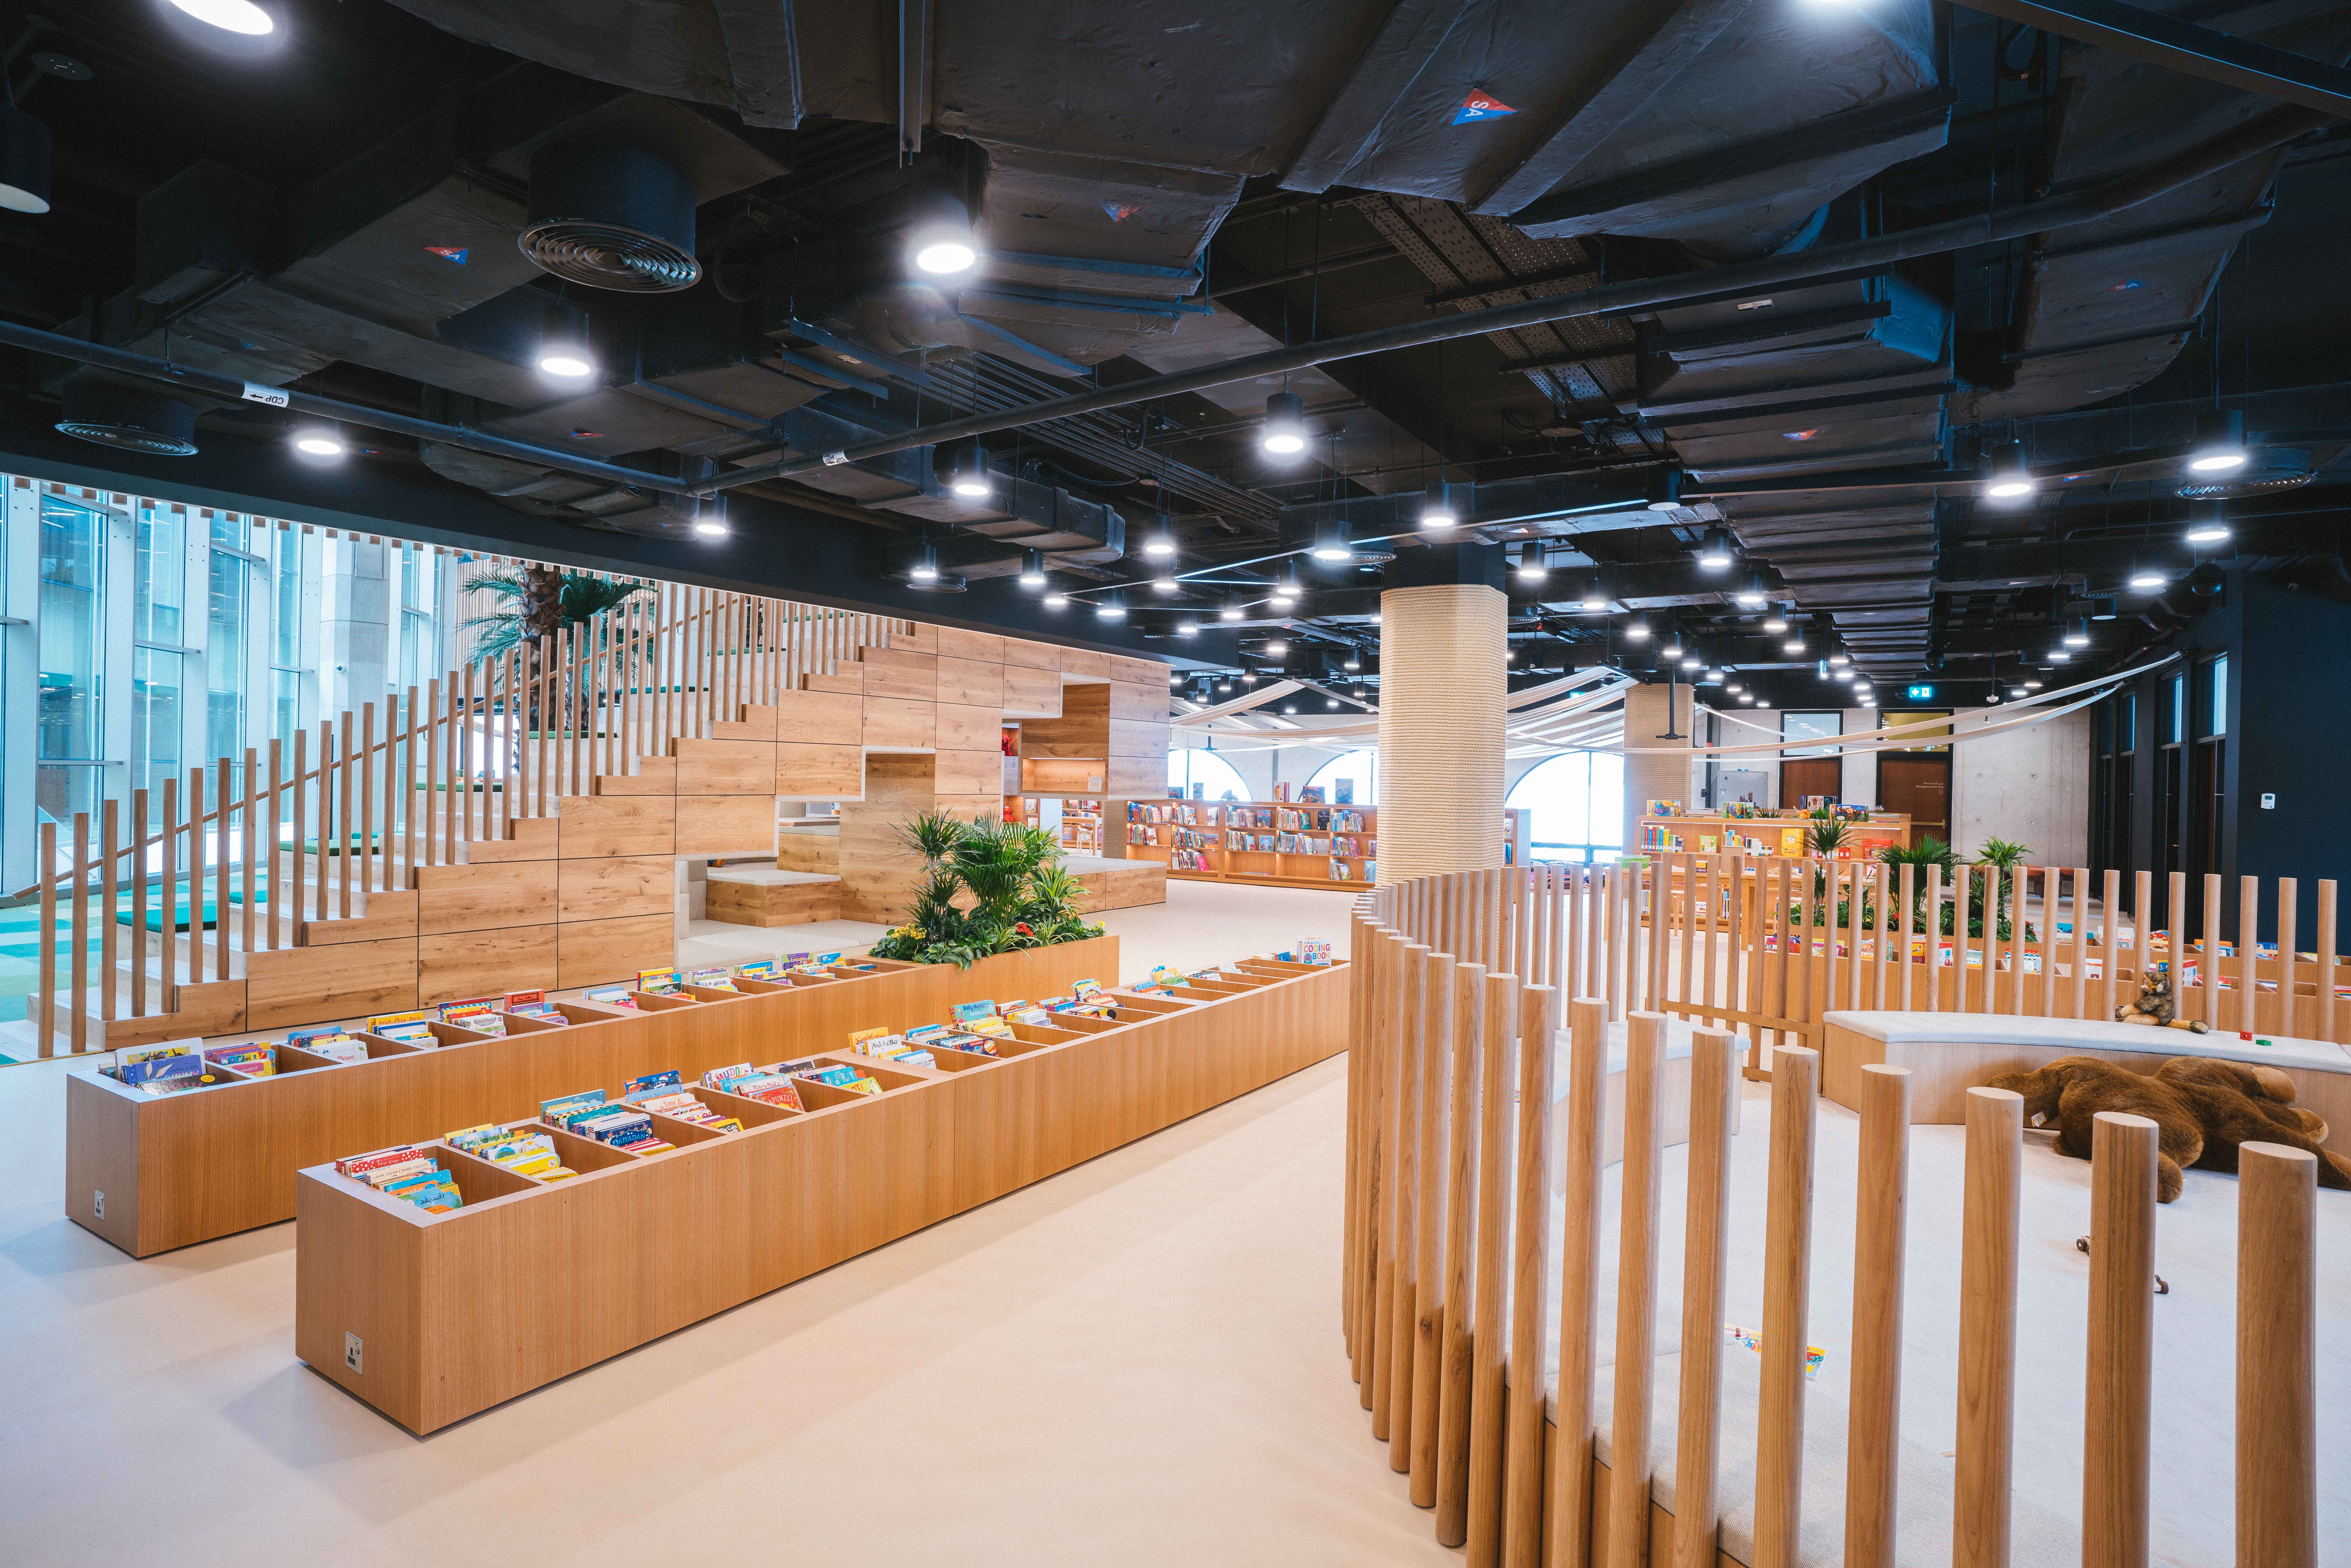 Abu Dhabi Children's Library